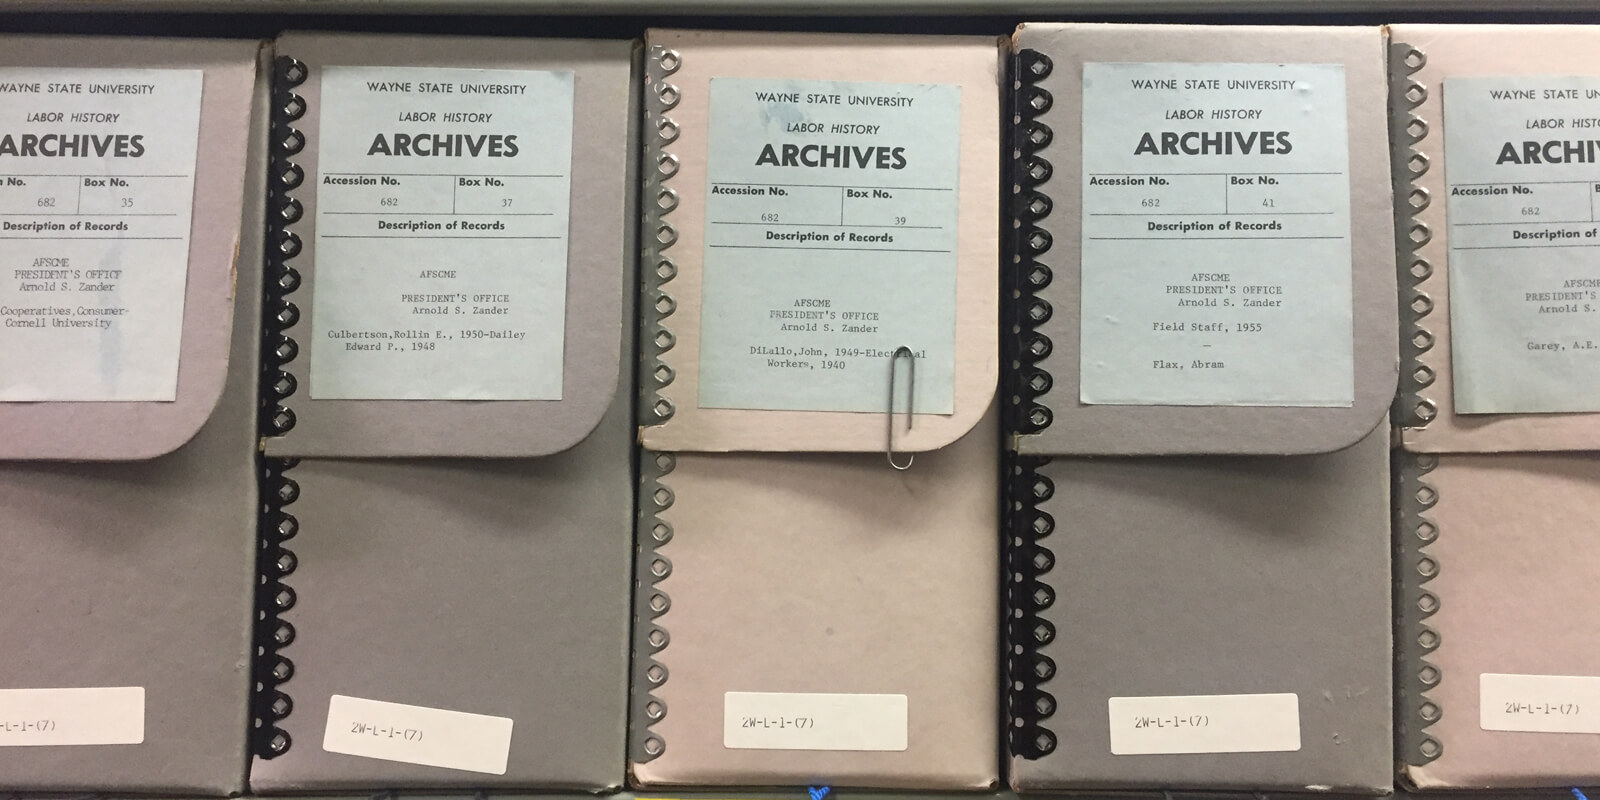 AFSCME’s Archives: A Treasure Trove of Labor History